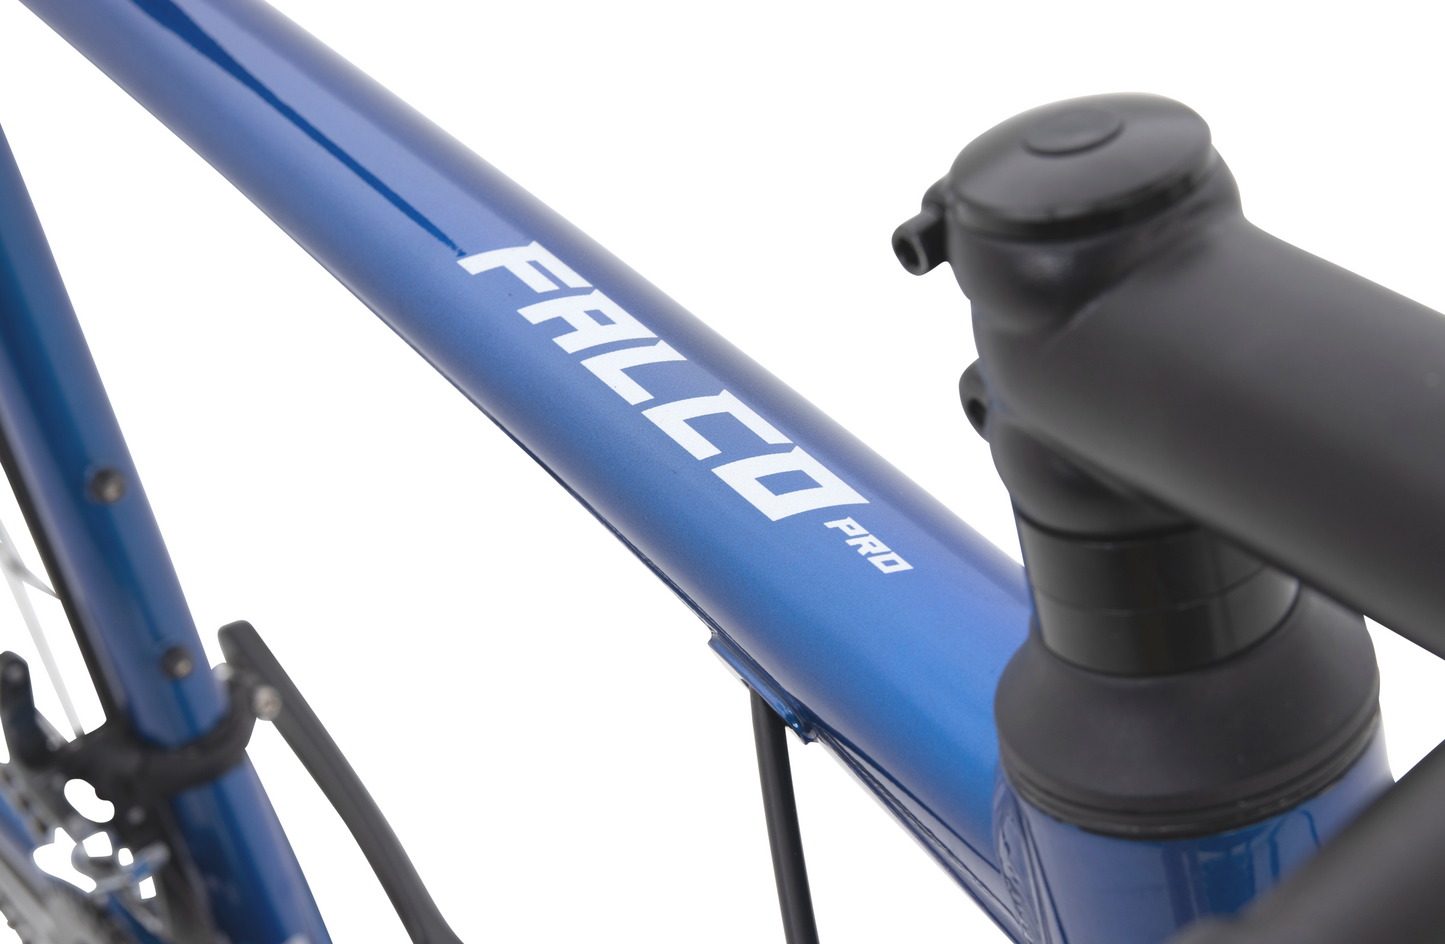 Falco Pro Road Bike MY23 Blue Bikes Reid   